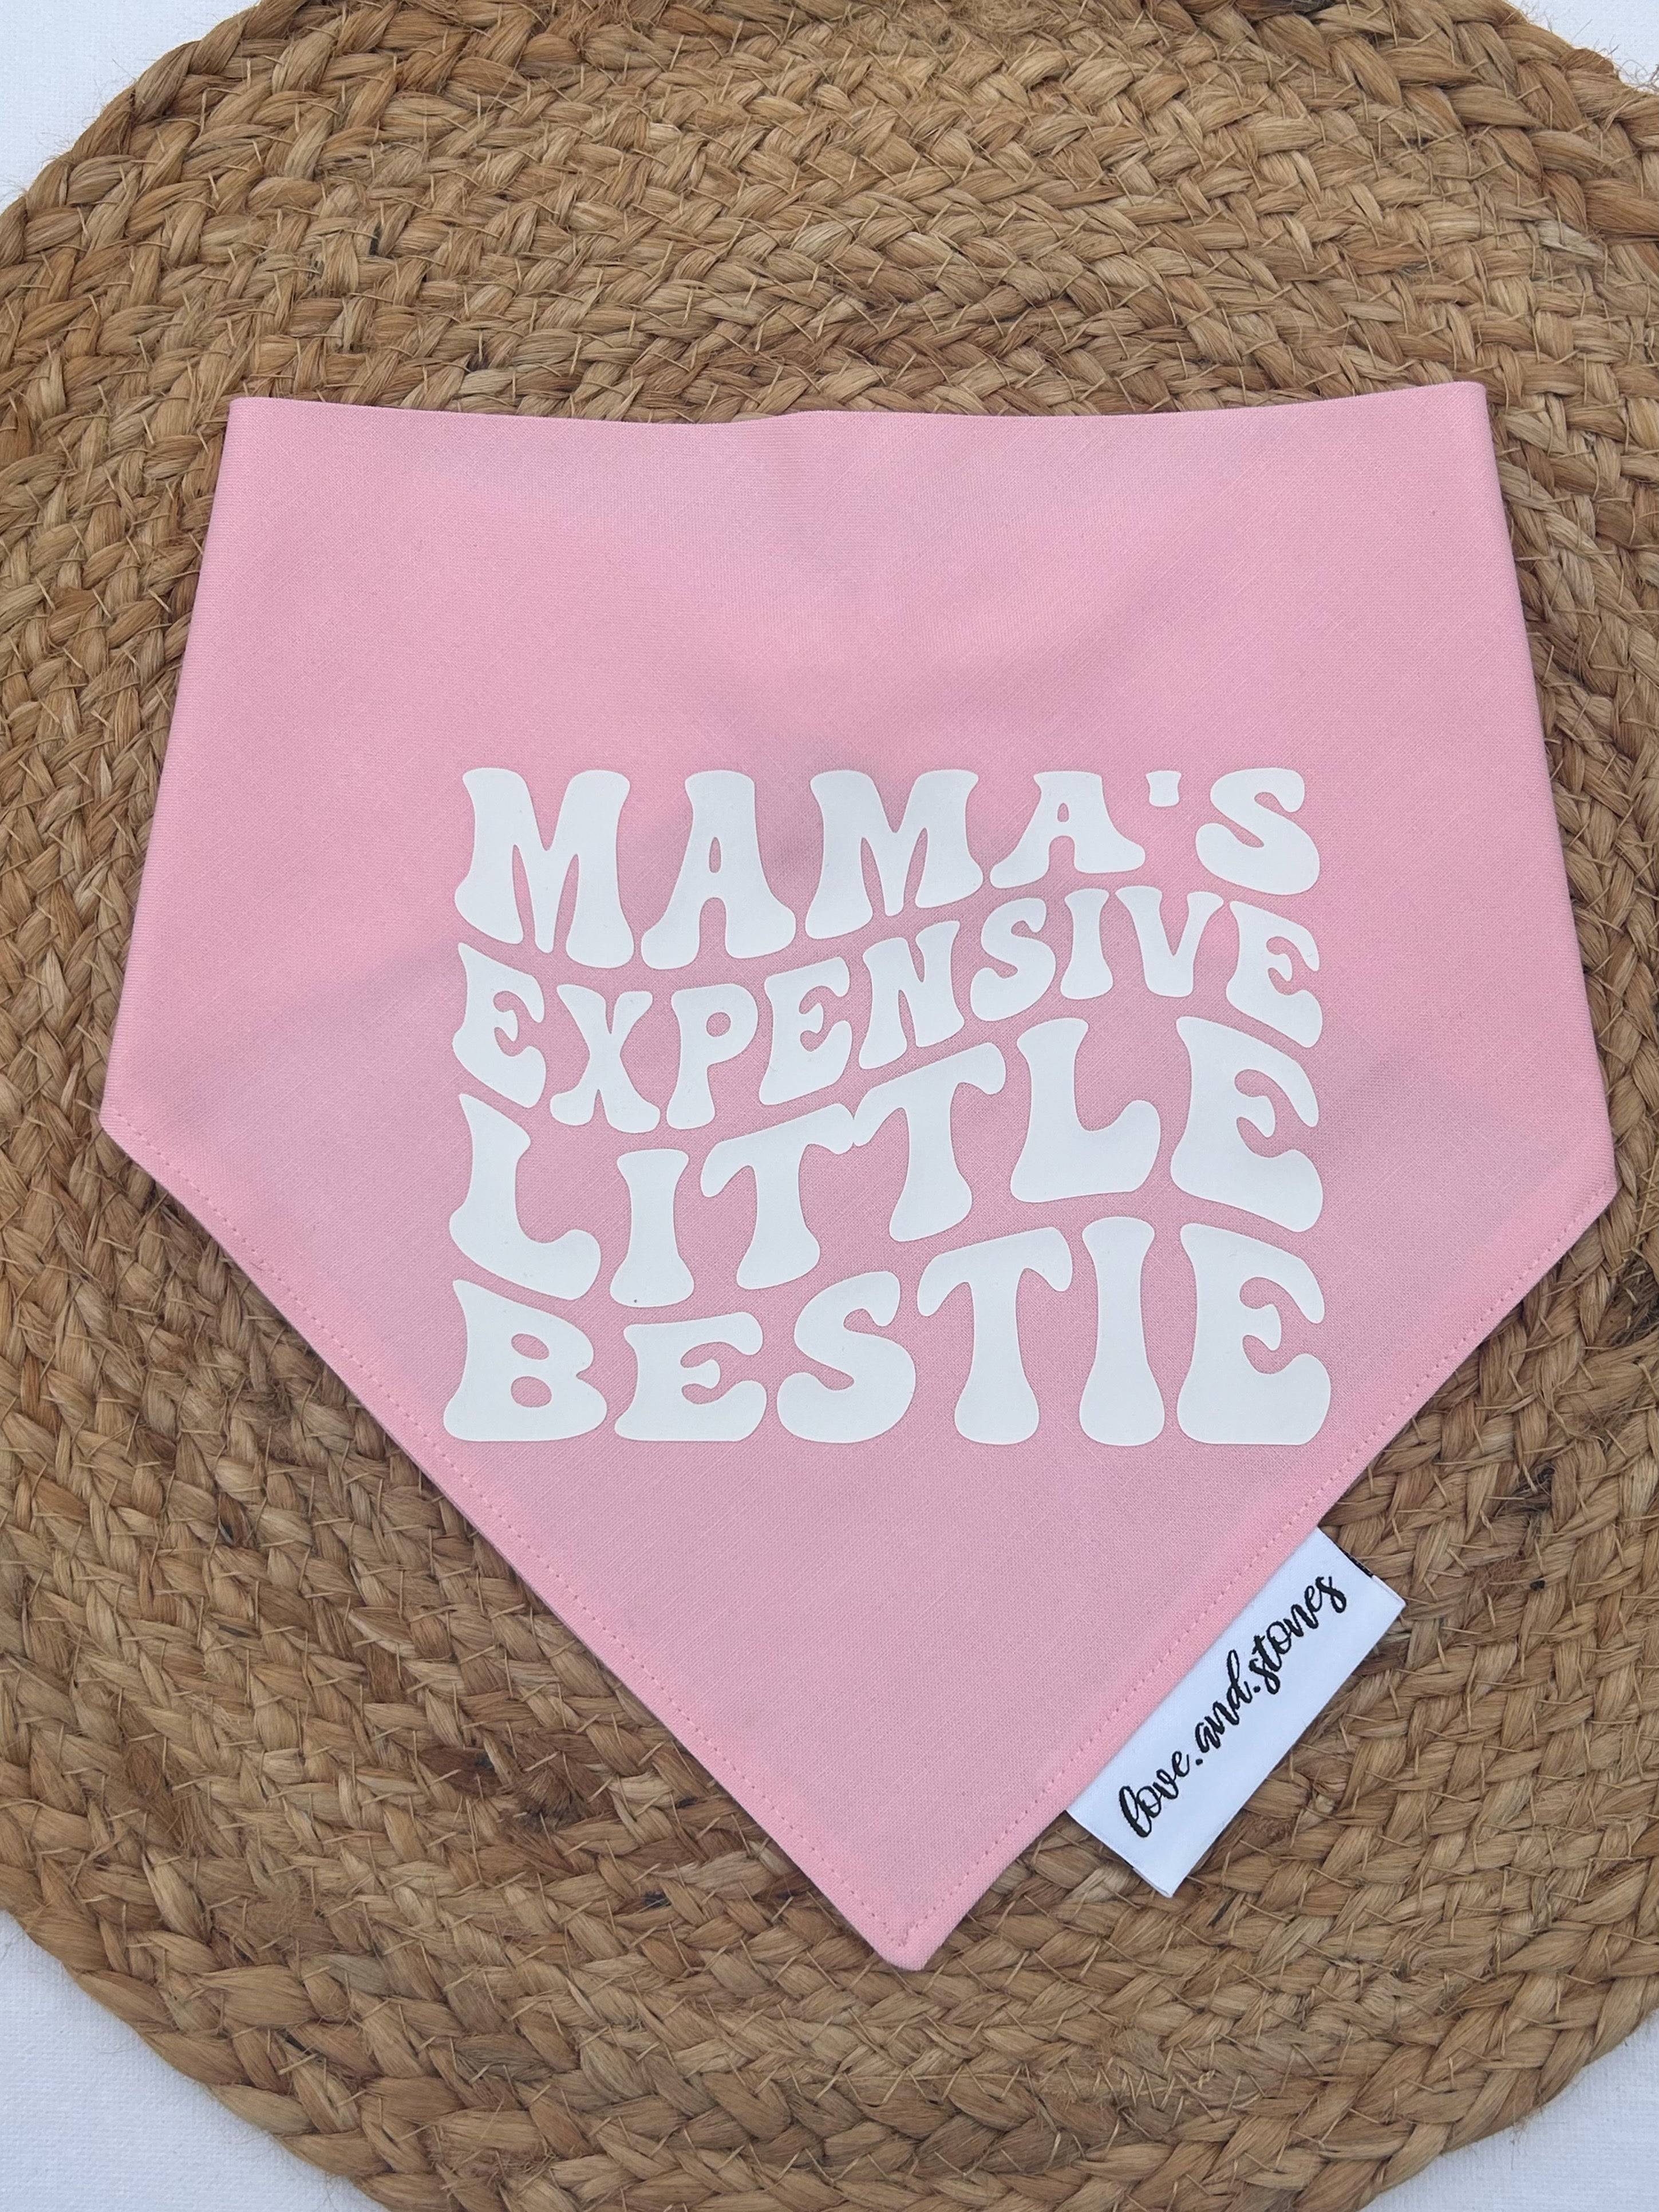 Mama’s expensive little bestie